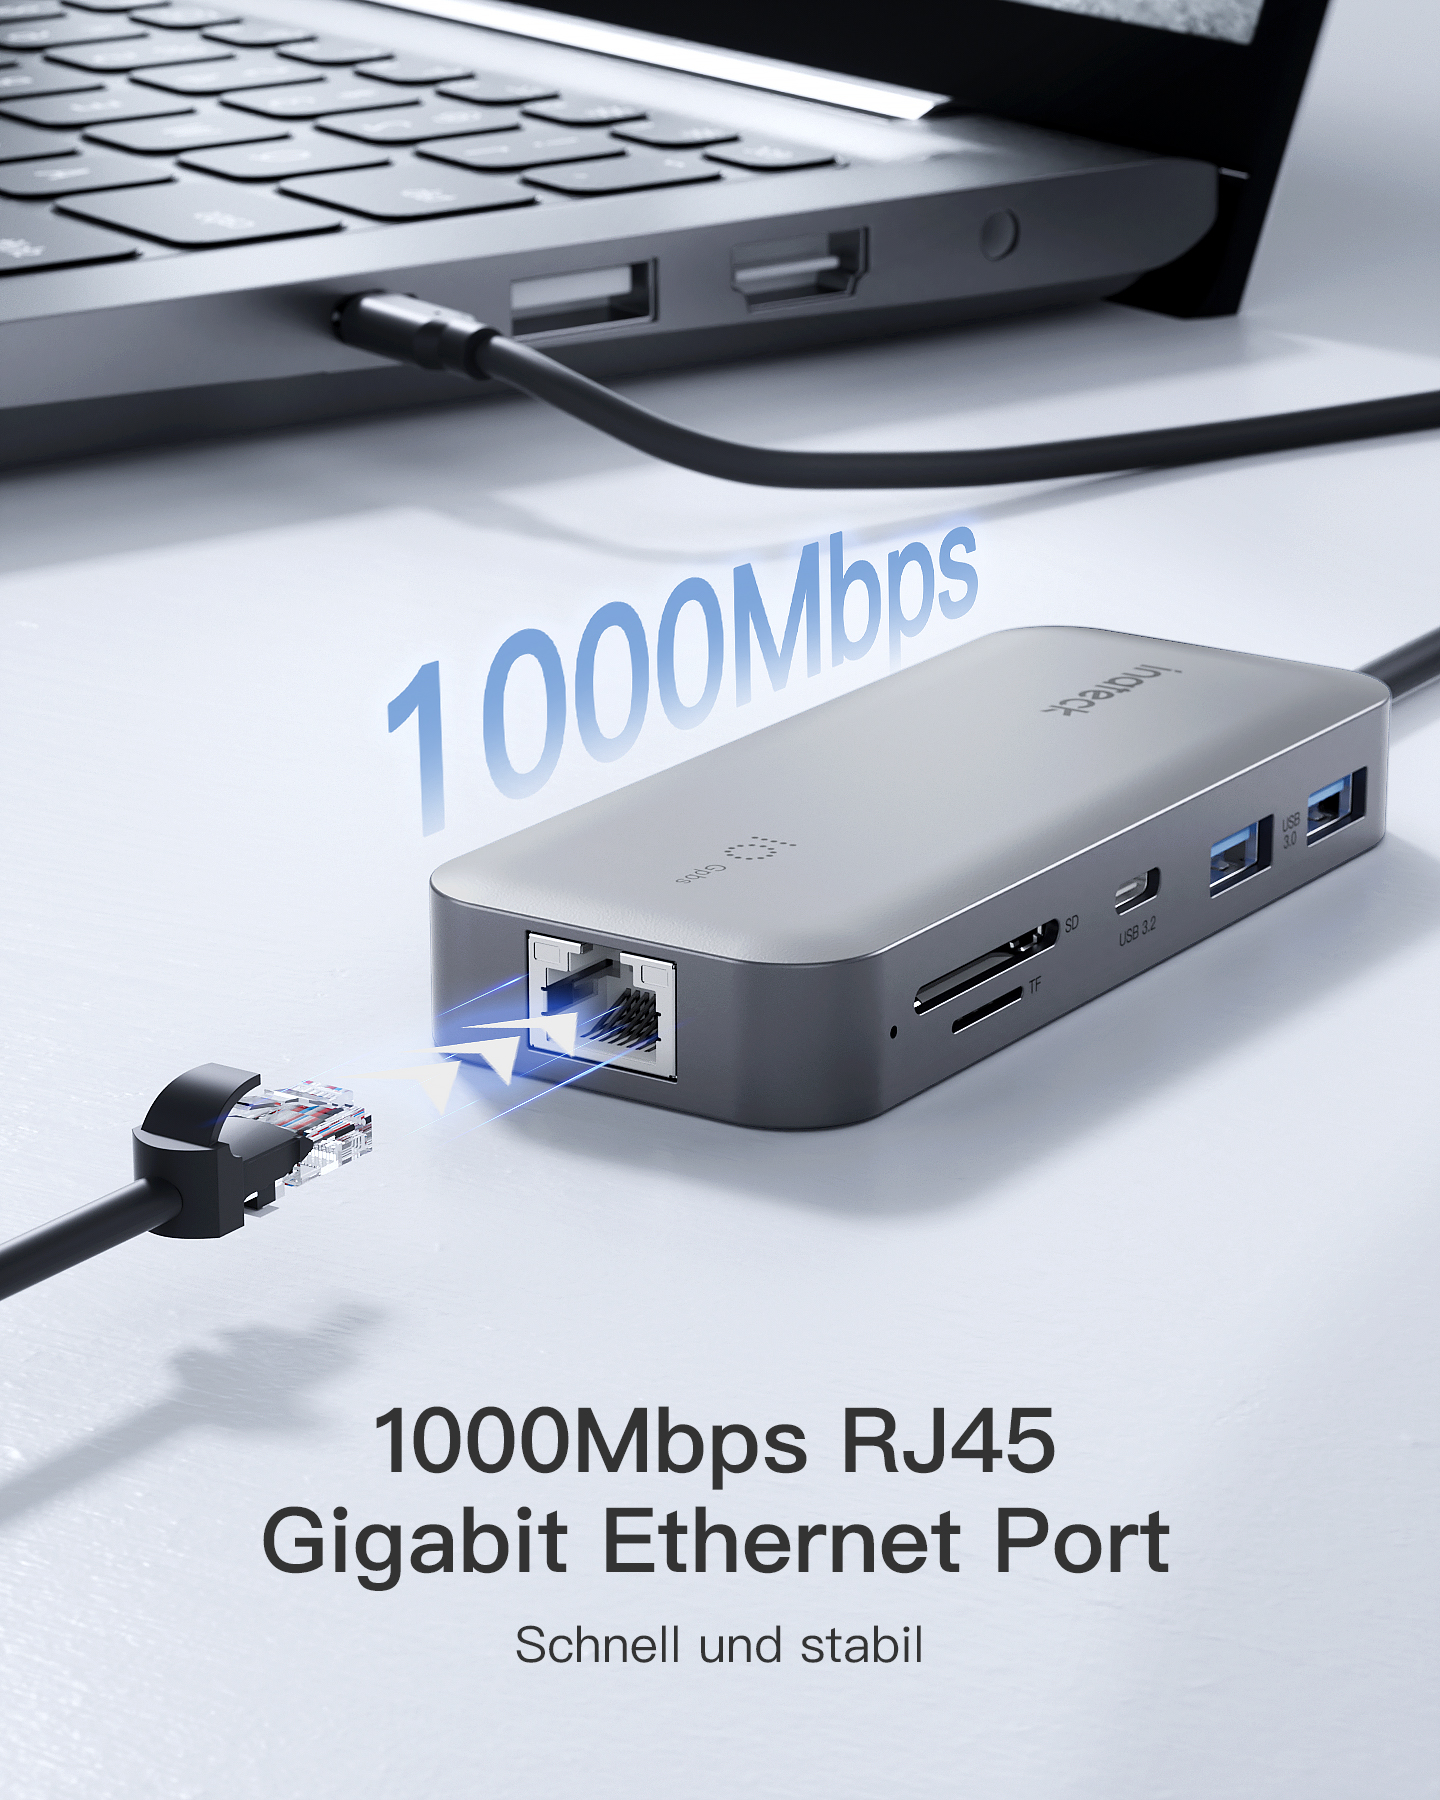 INATECK 10 in 1 Hub, A, 100W RJ45 C, USB 4K HDMI, SD/TF, hub, silver Video＋Data, 2 C 2 USB 60Hz PD, USB Ethernet, USB